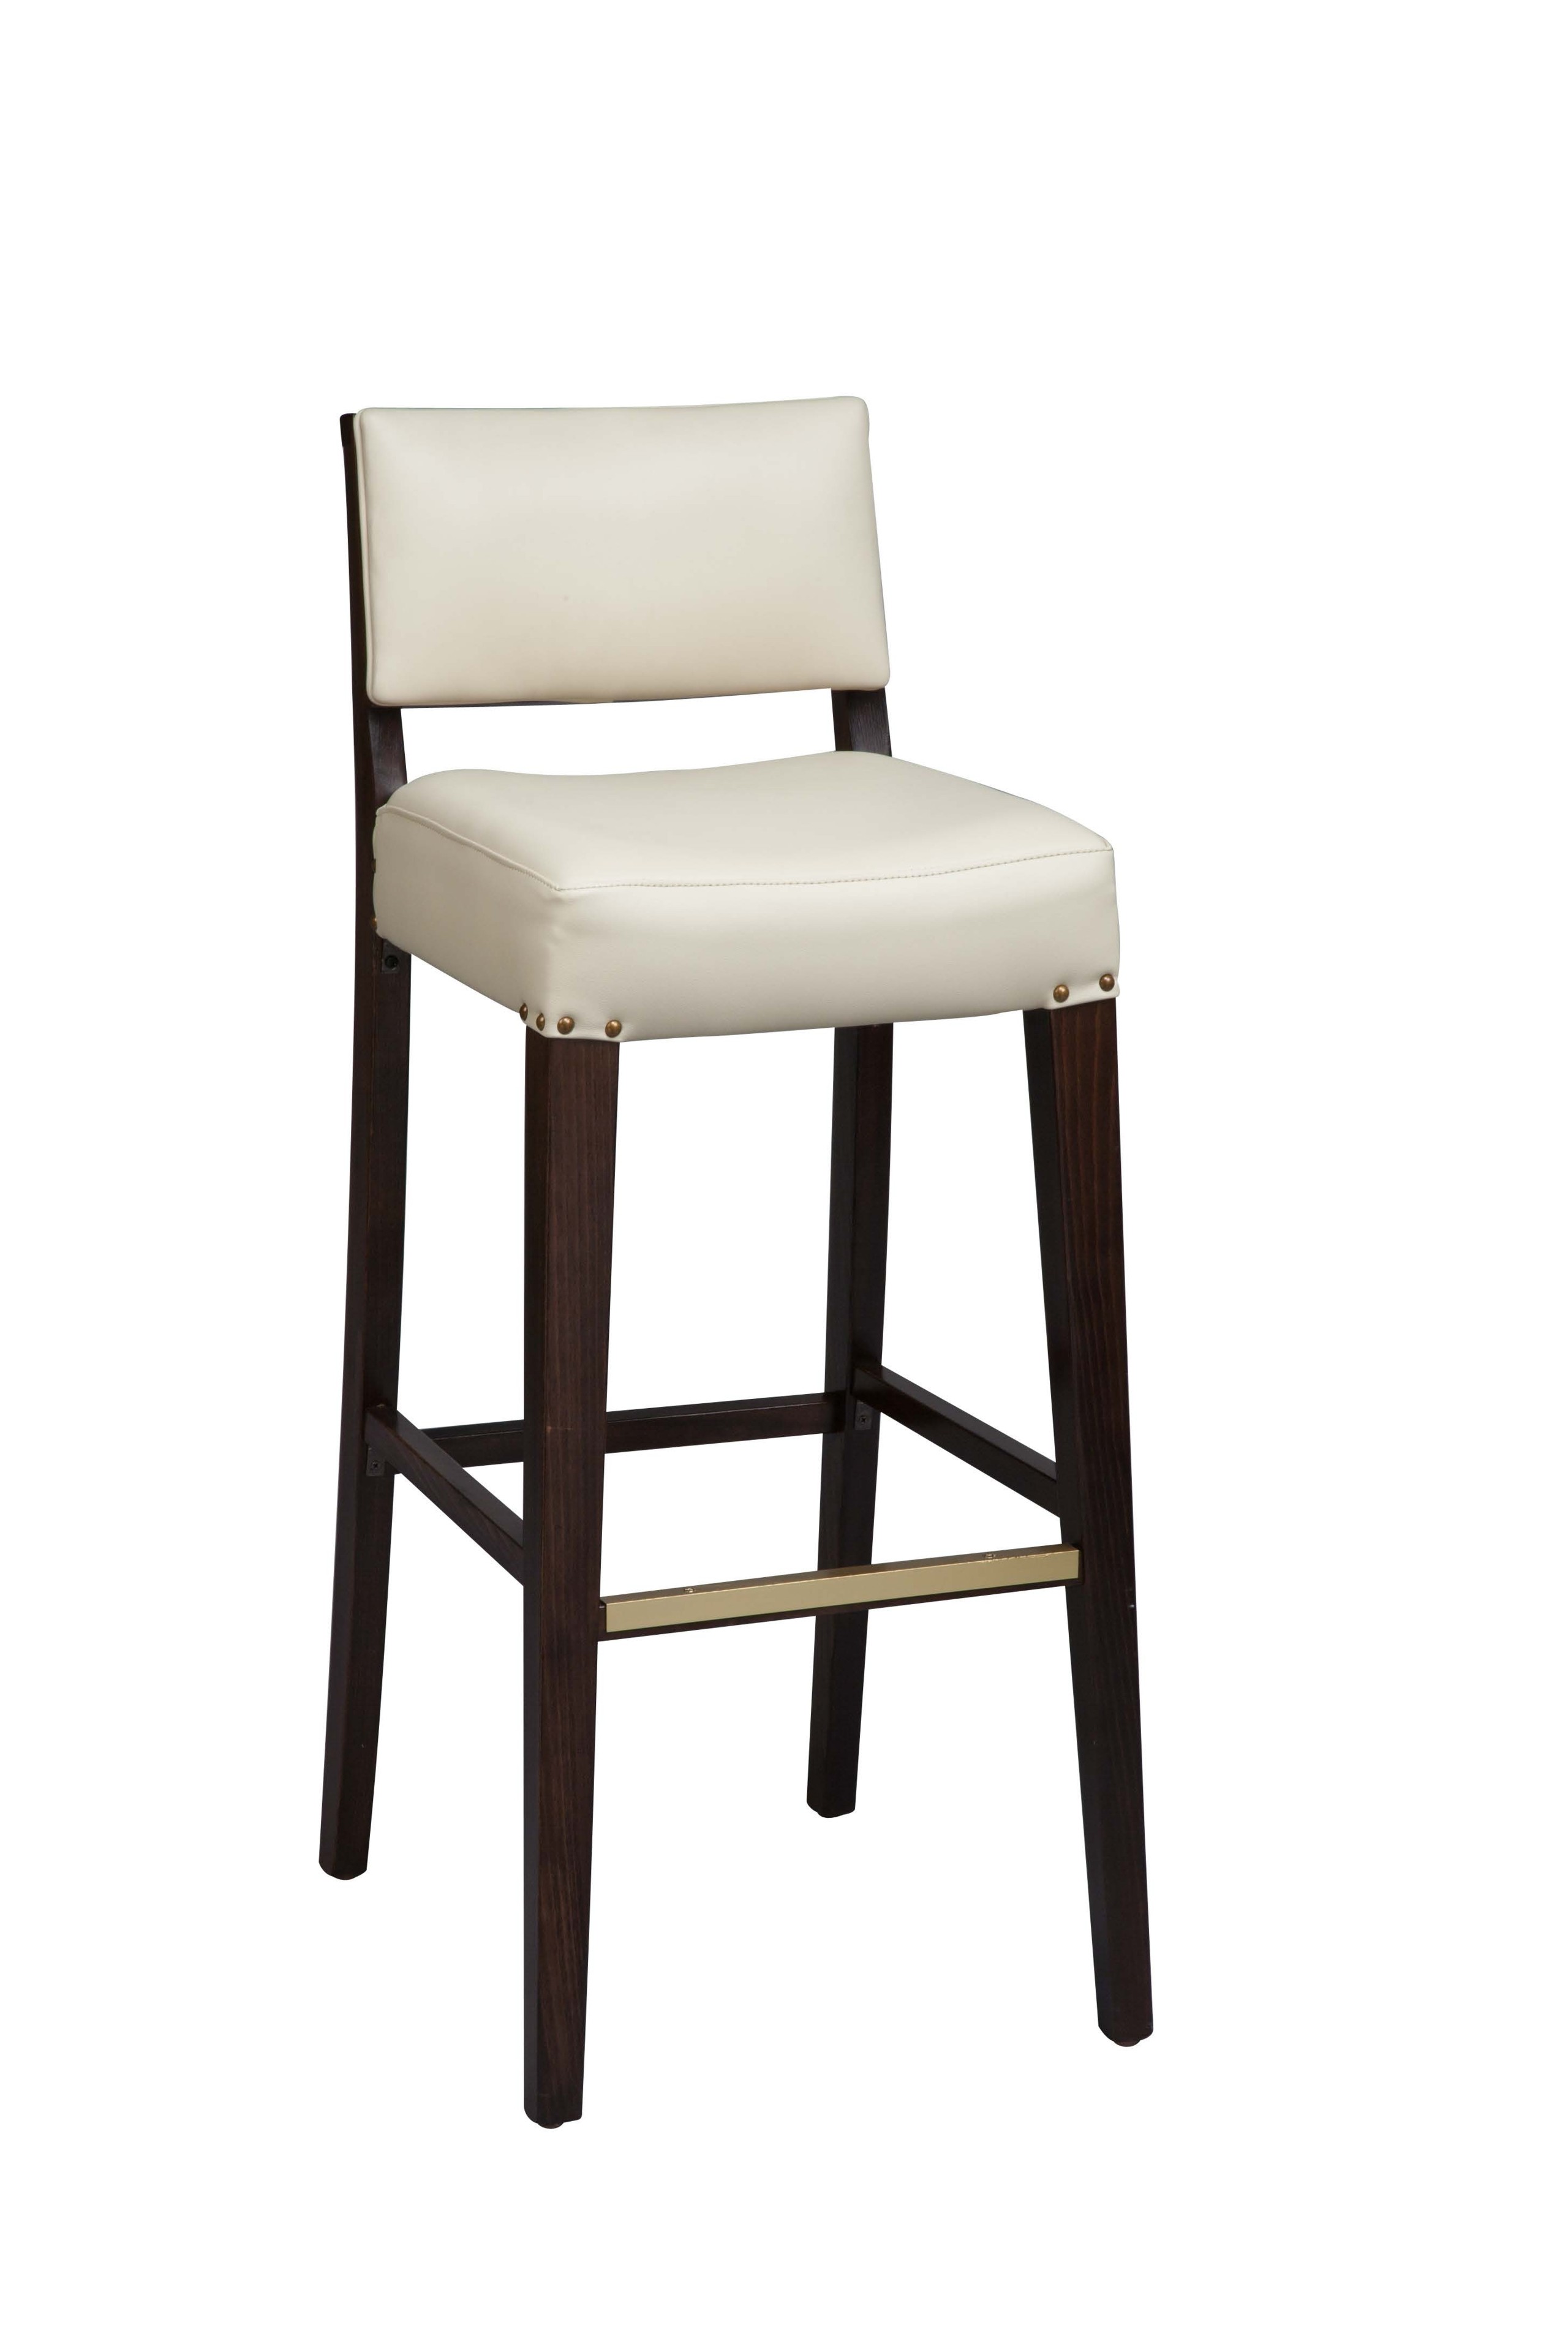 Regal seating company 2438usb low back bar stool